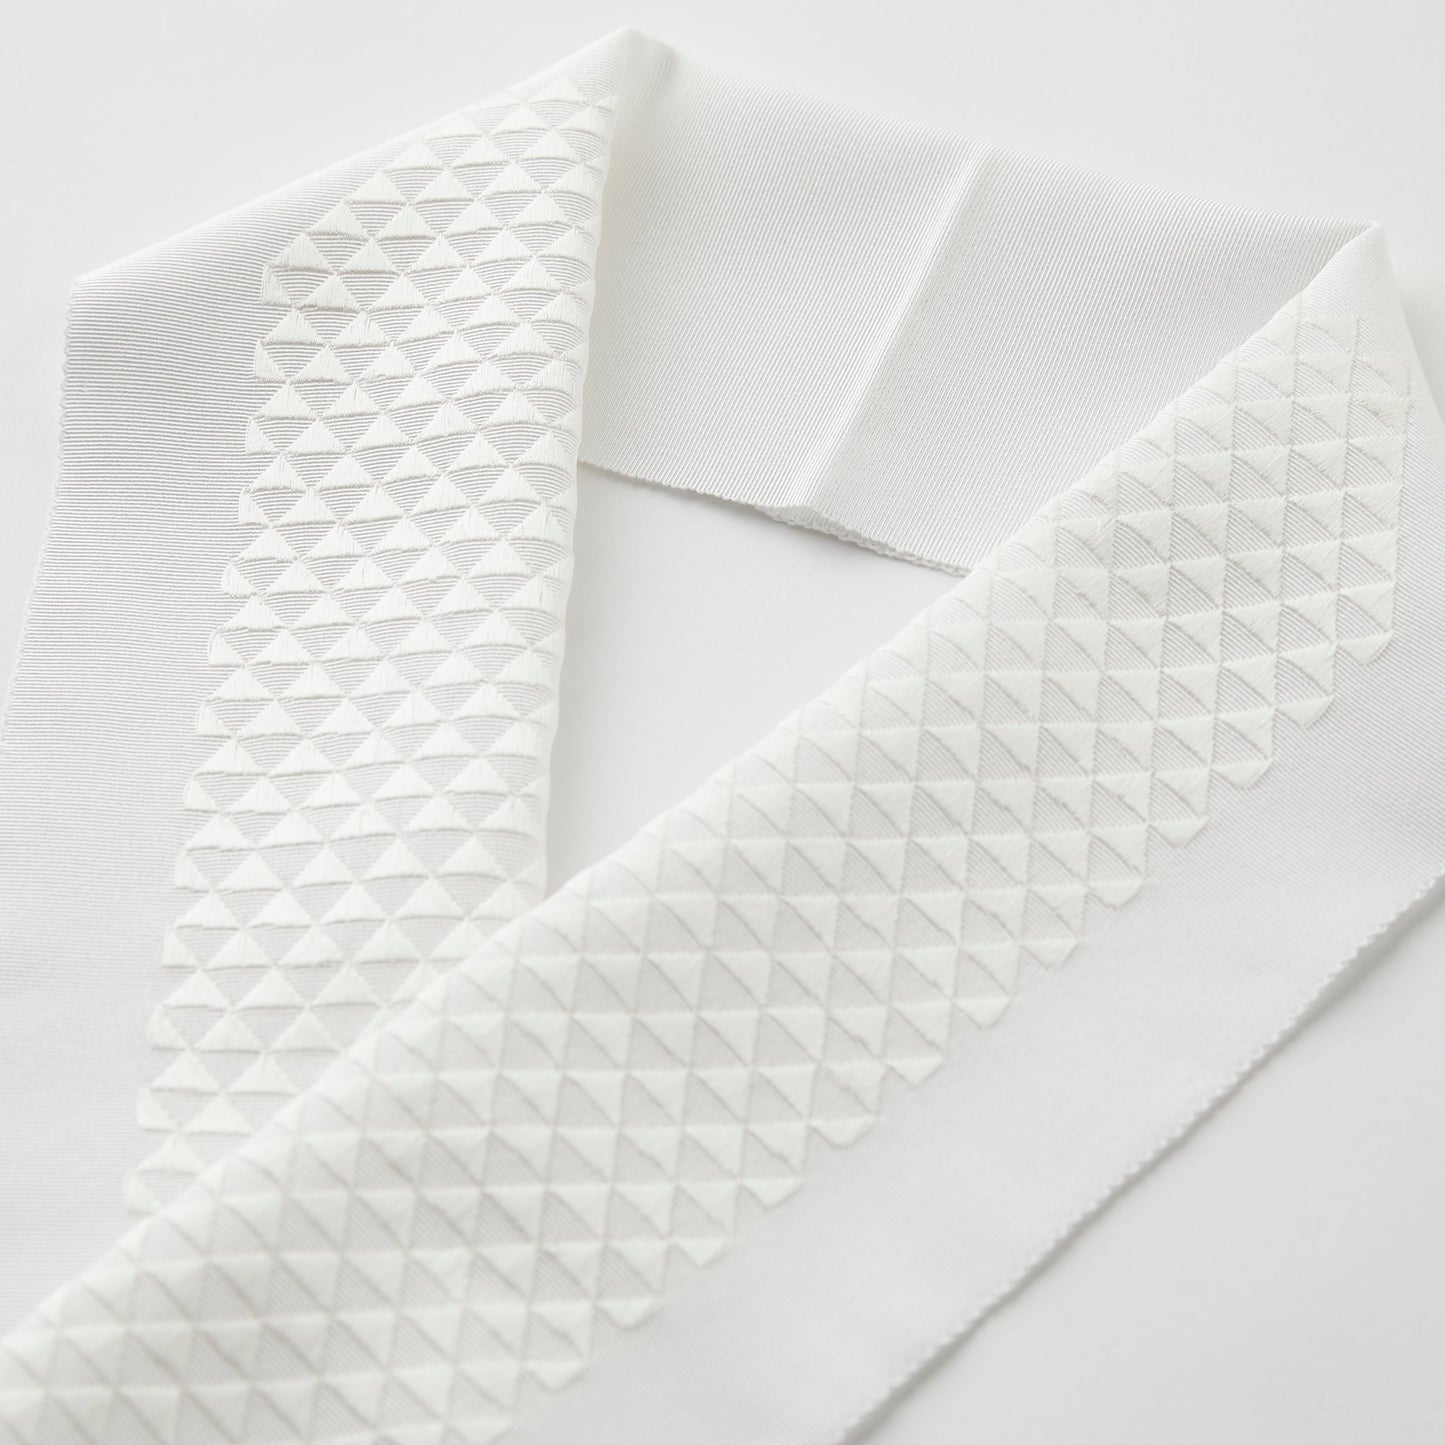 Half-collar embroidery "scales" white/white